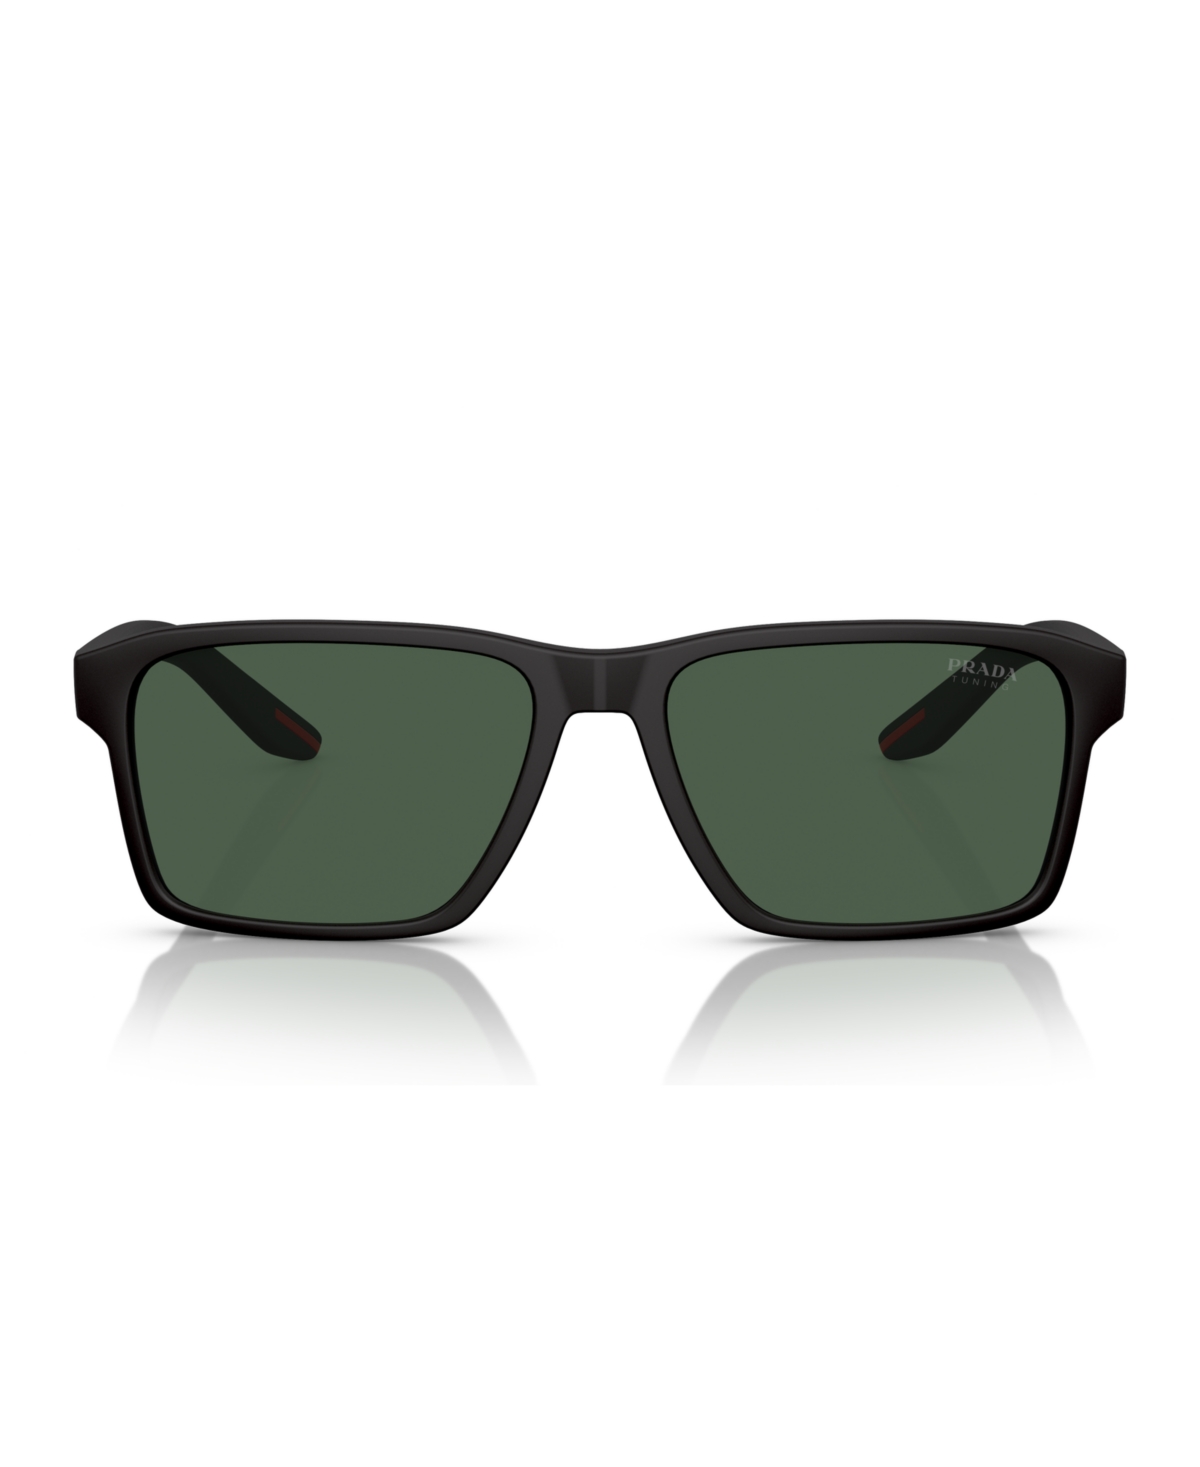 Men's Sunglasses, Ps 05YS - Black Rubber